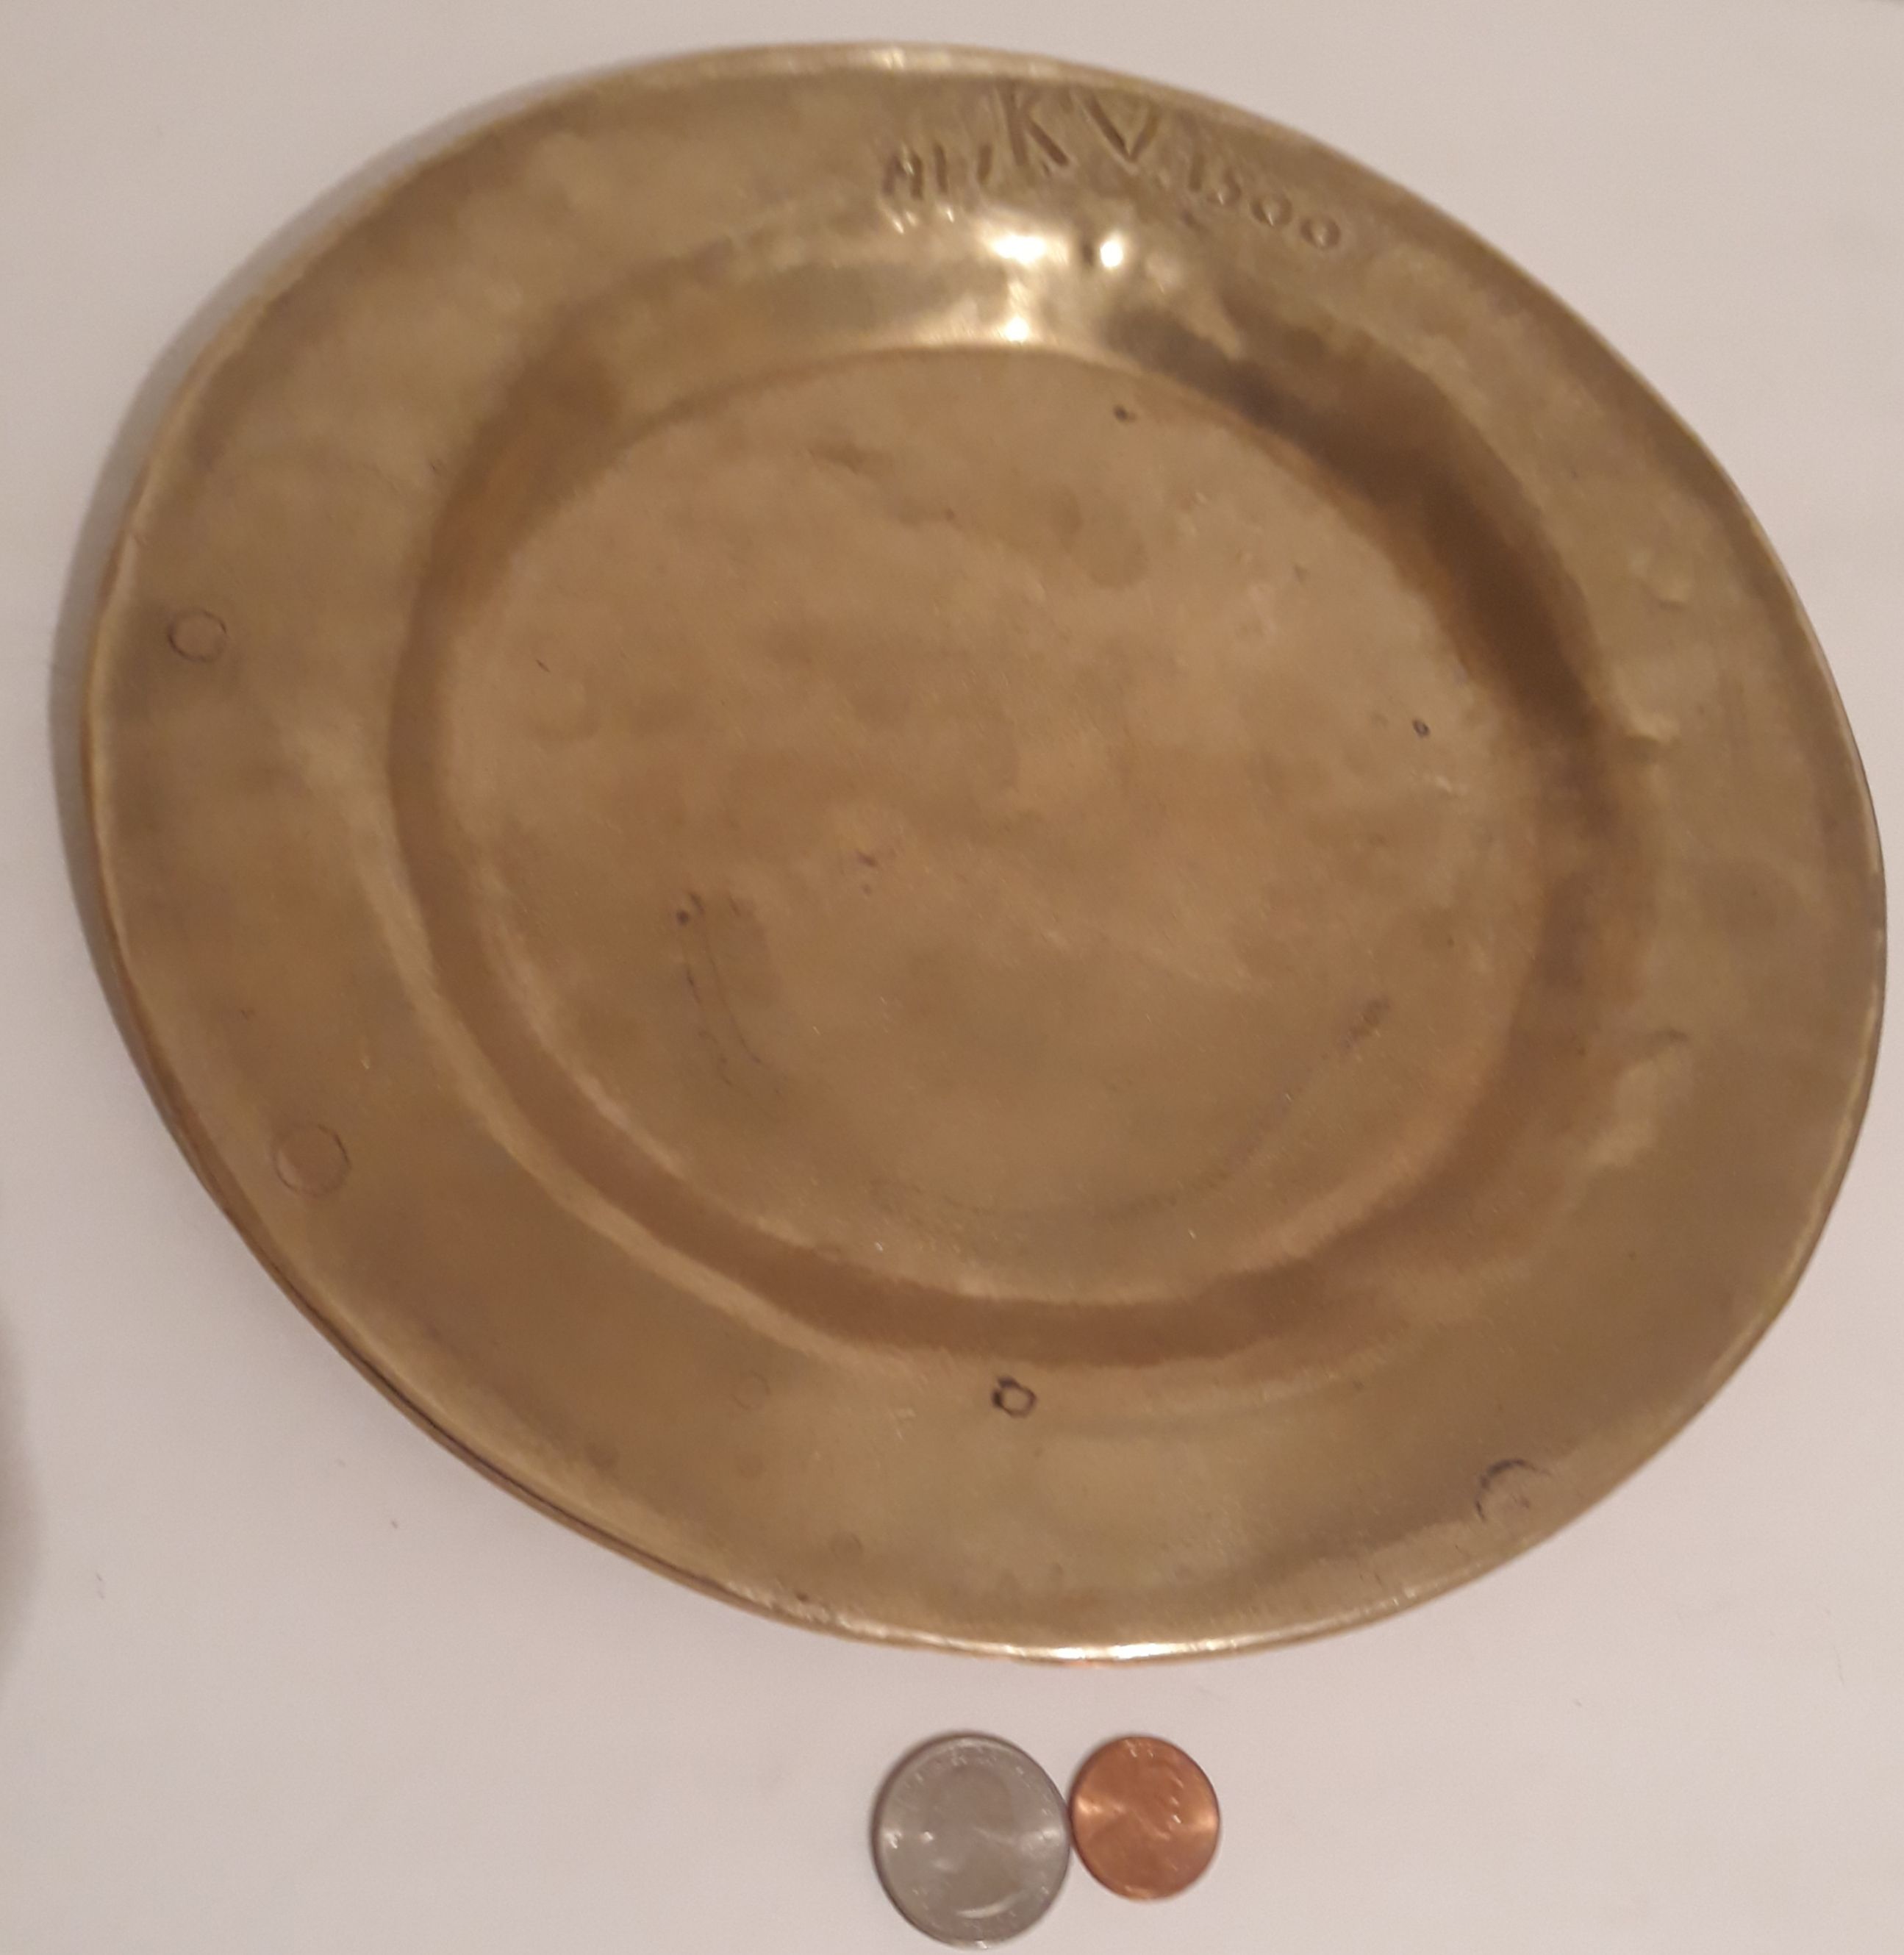 Vintage Metal Brass Plate, Super Heavy Duty, 10" Wide, Weighs a Little over 2 1/4 Pounds, ARI KV 1500, Kitchen Decor, Shelf Display